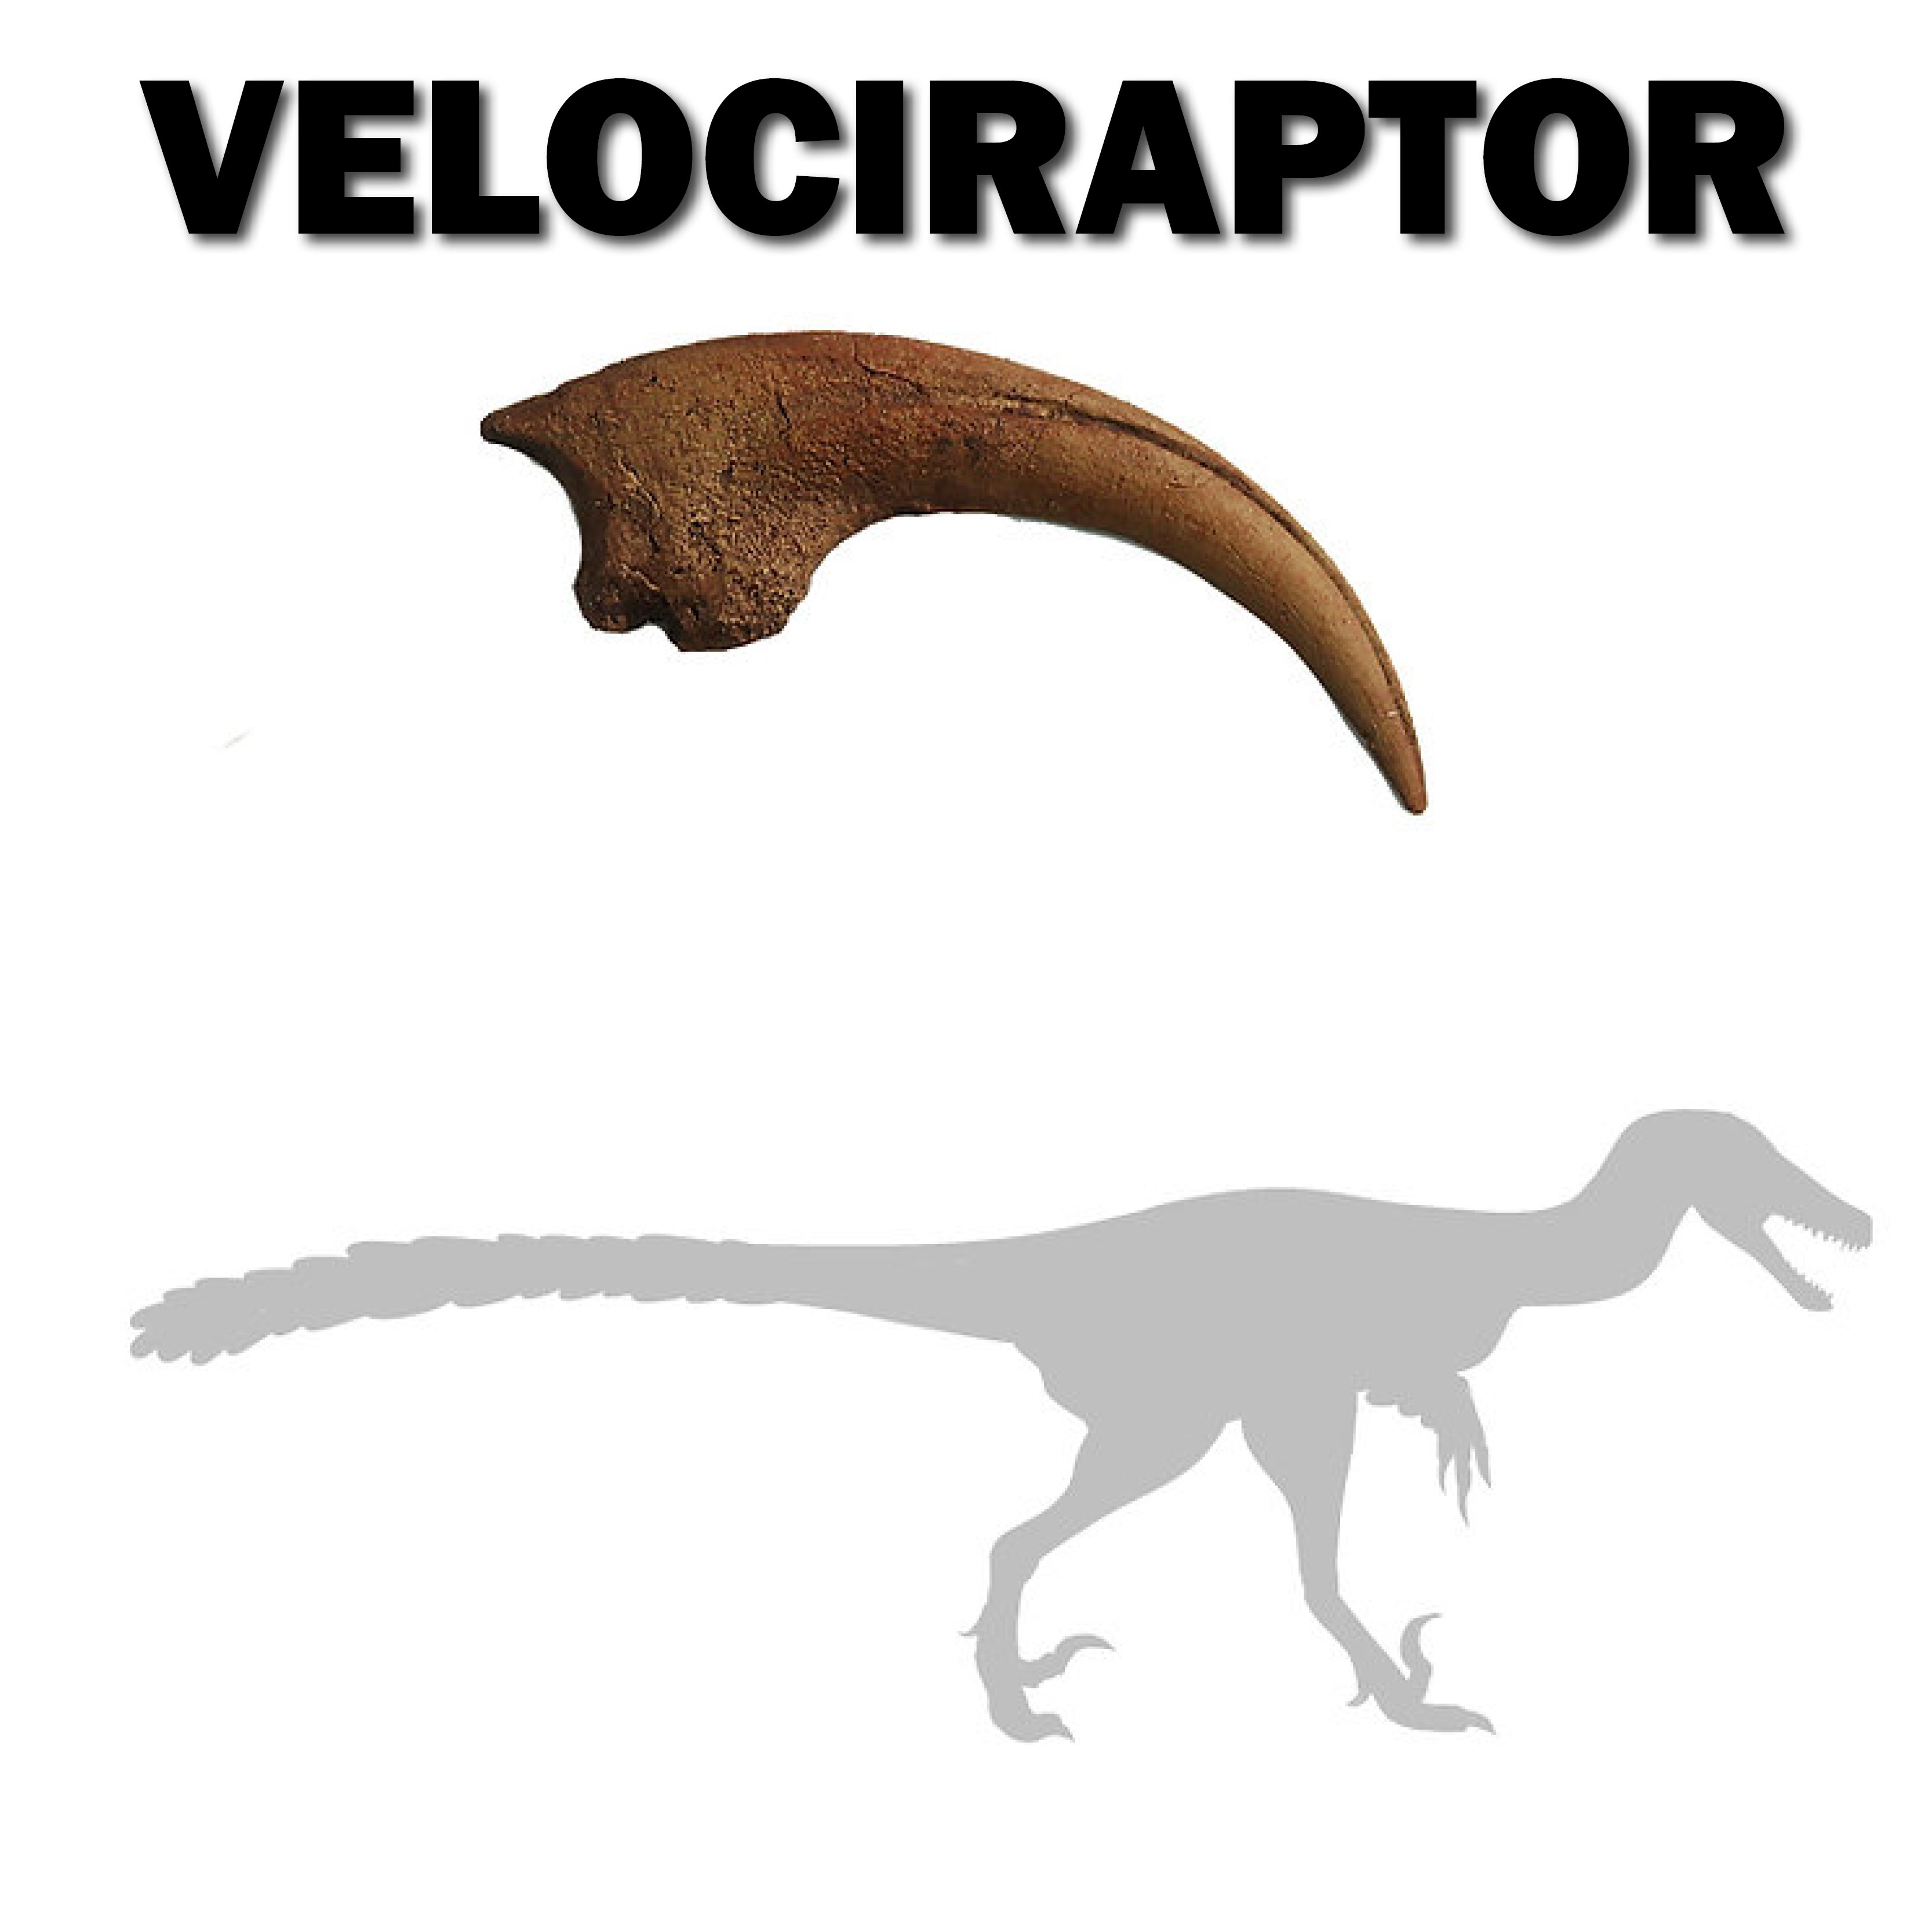 raptor fossils